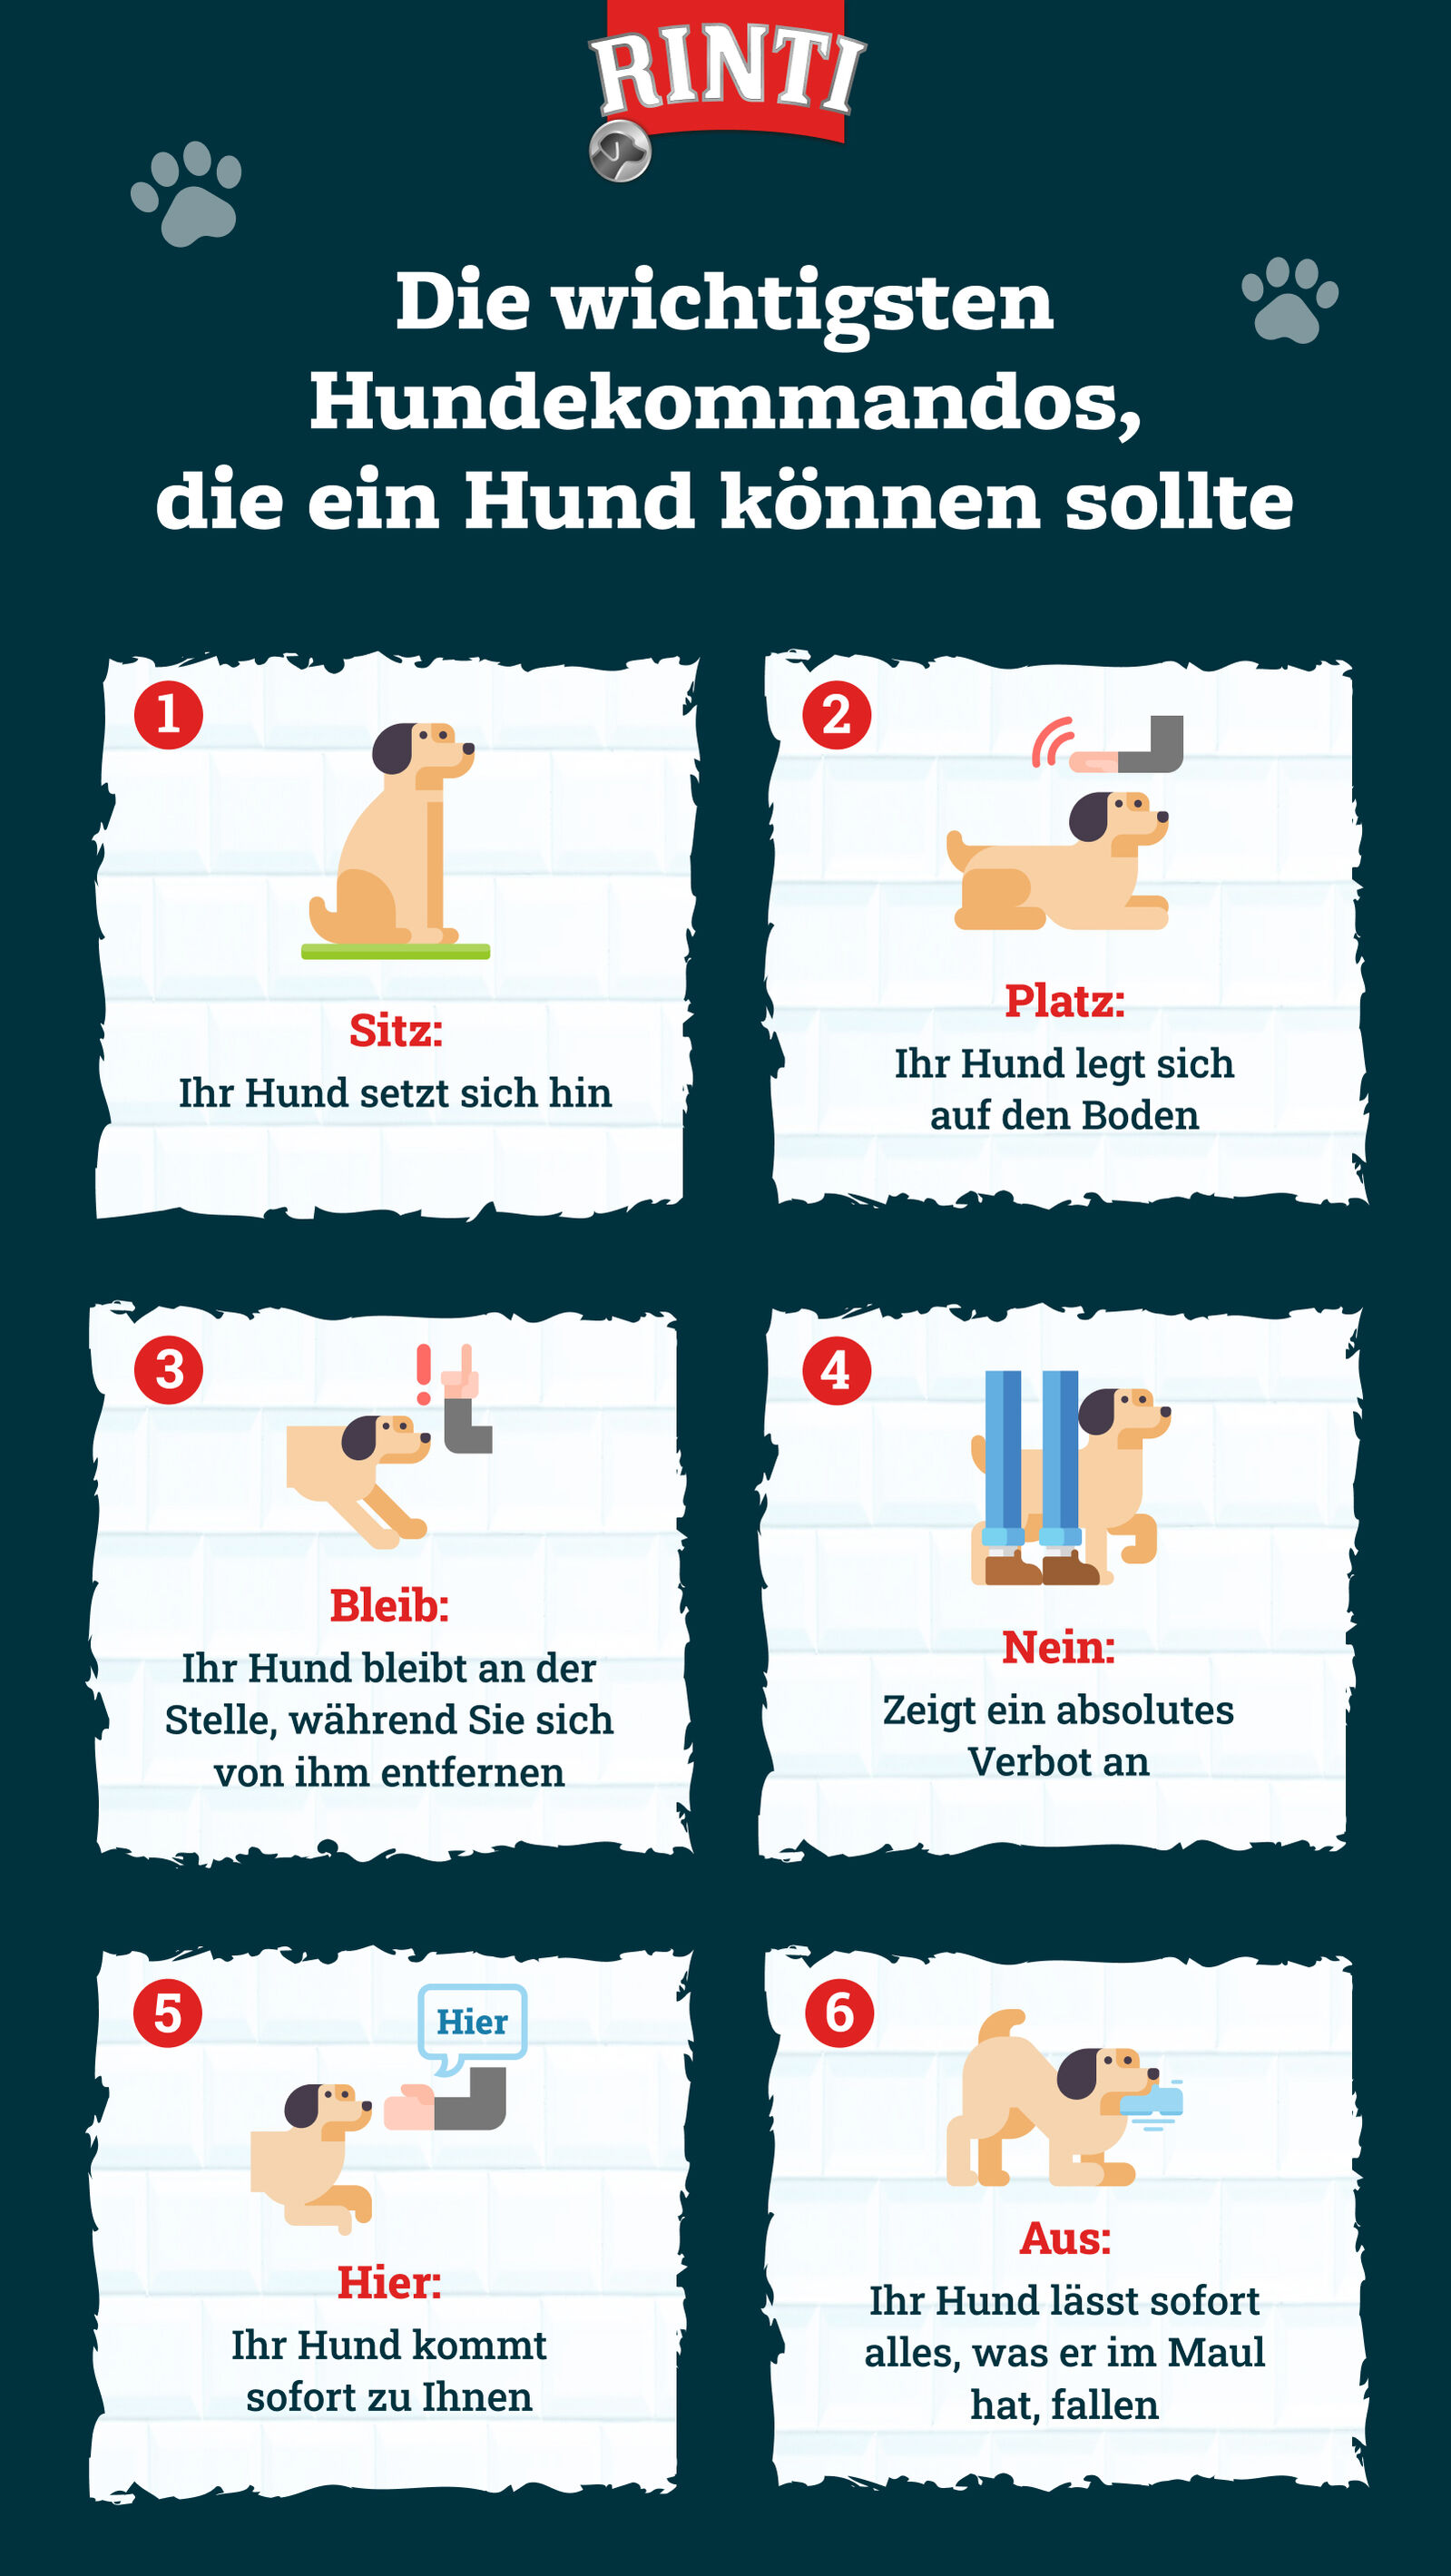 Infografik von Rinti zum Thema Hundekommandos